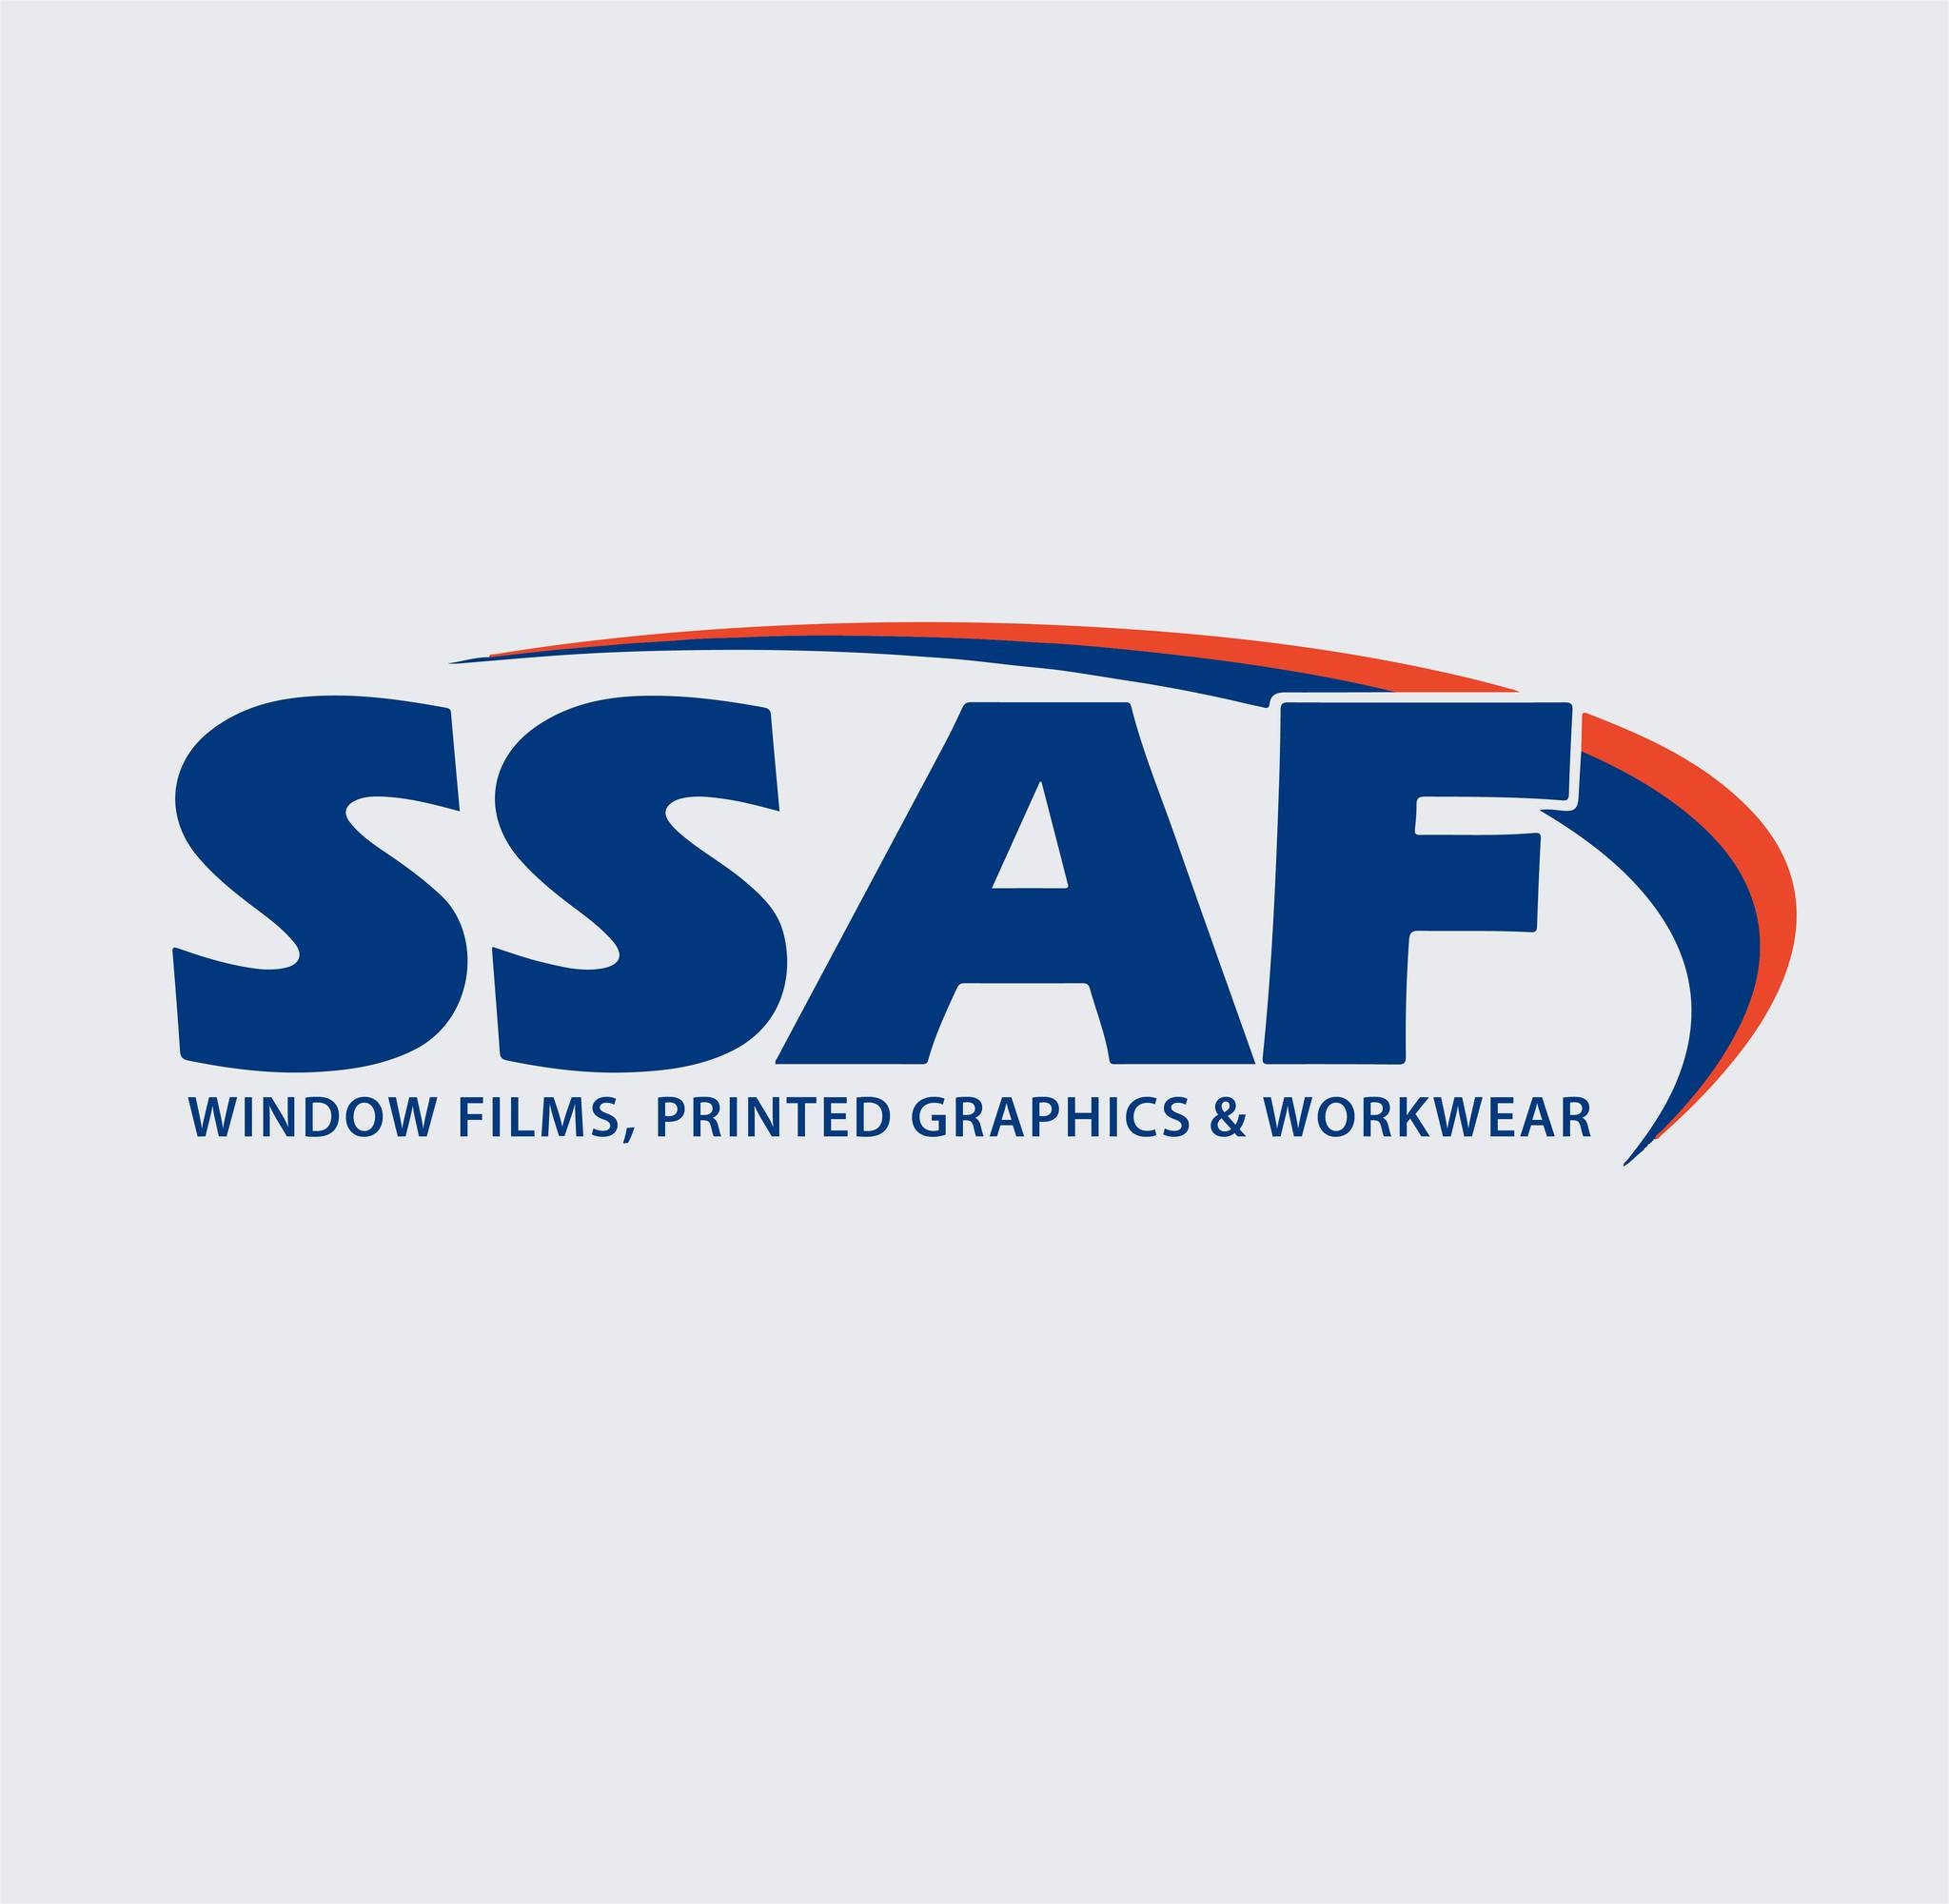 SSAF - Window Films, Printed Graphics & Workwear